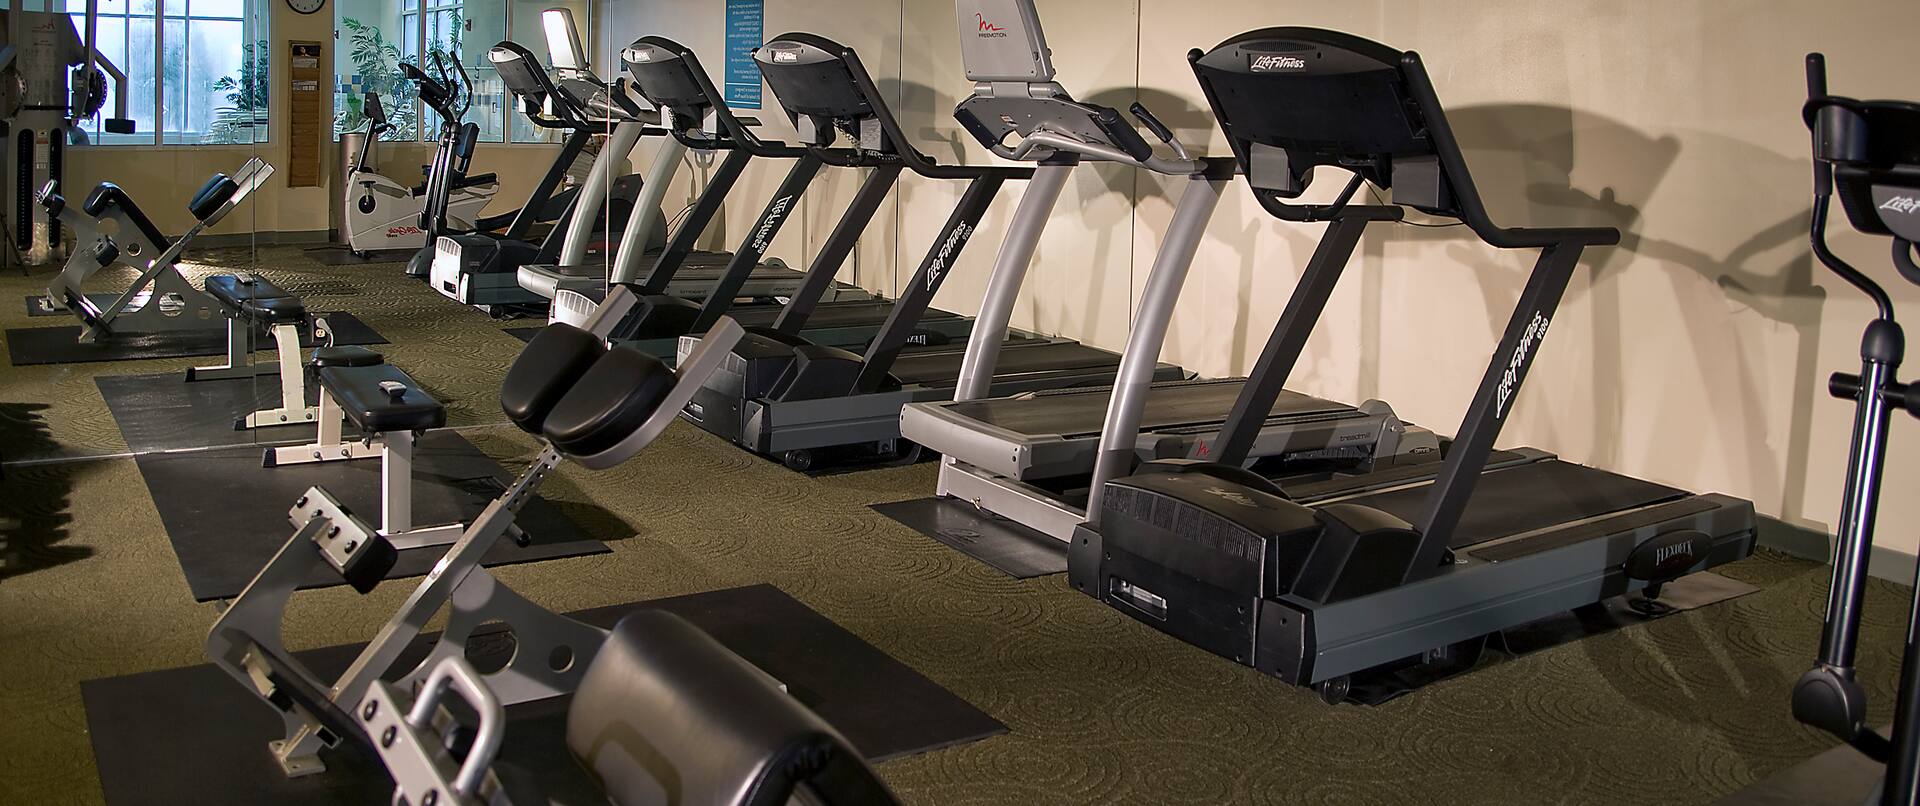 Fitness Center - Treadmills, Weight Machines